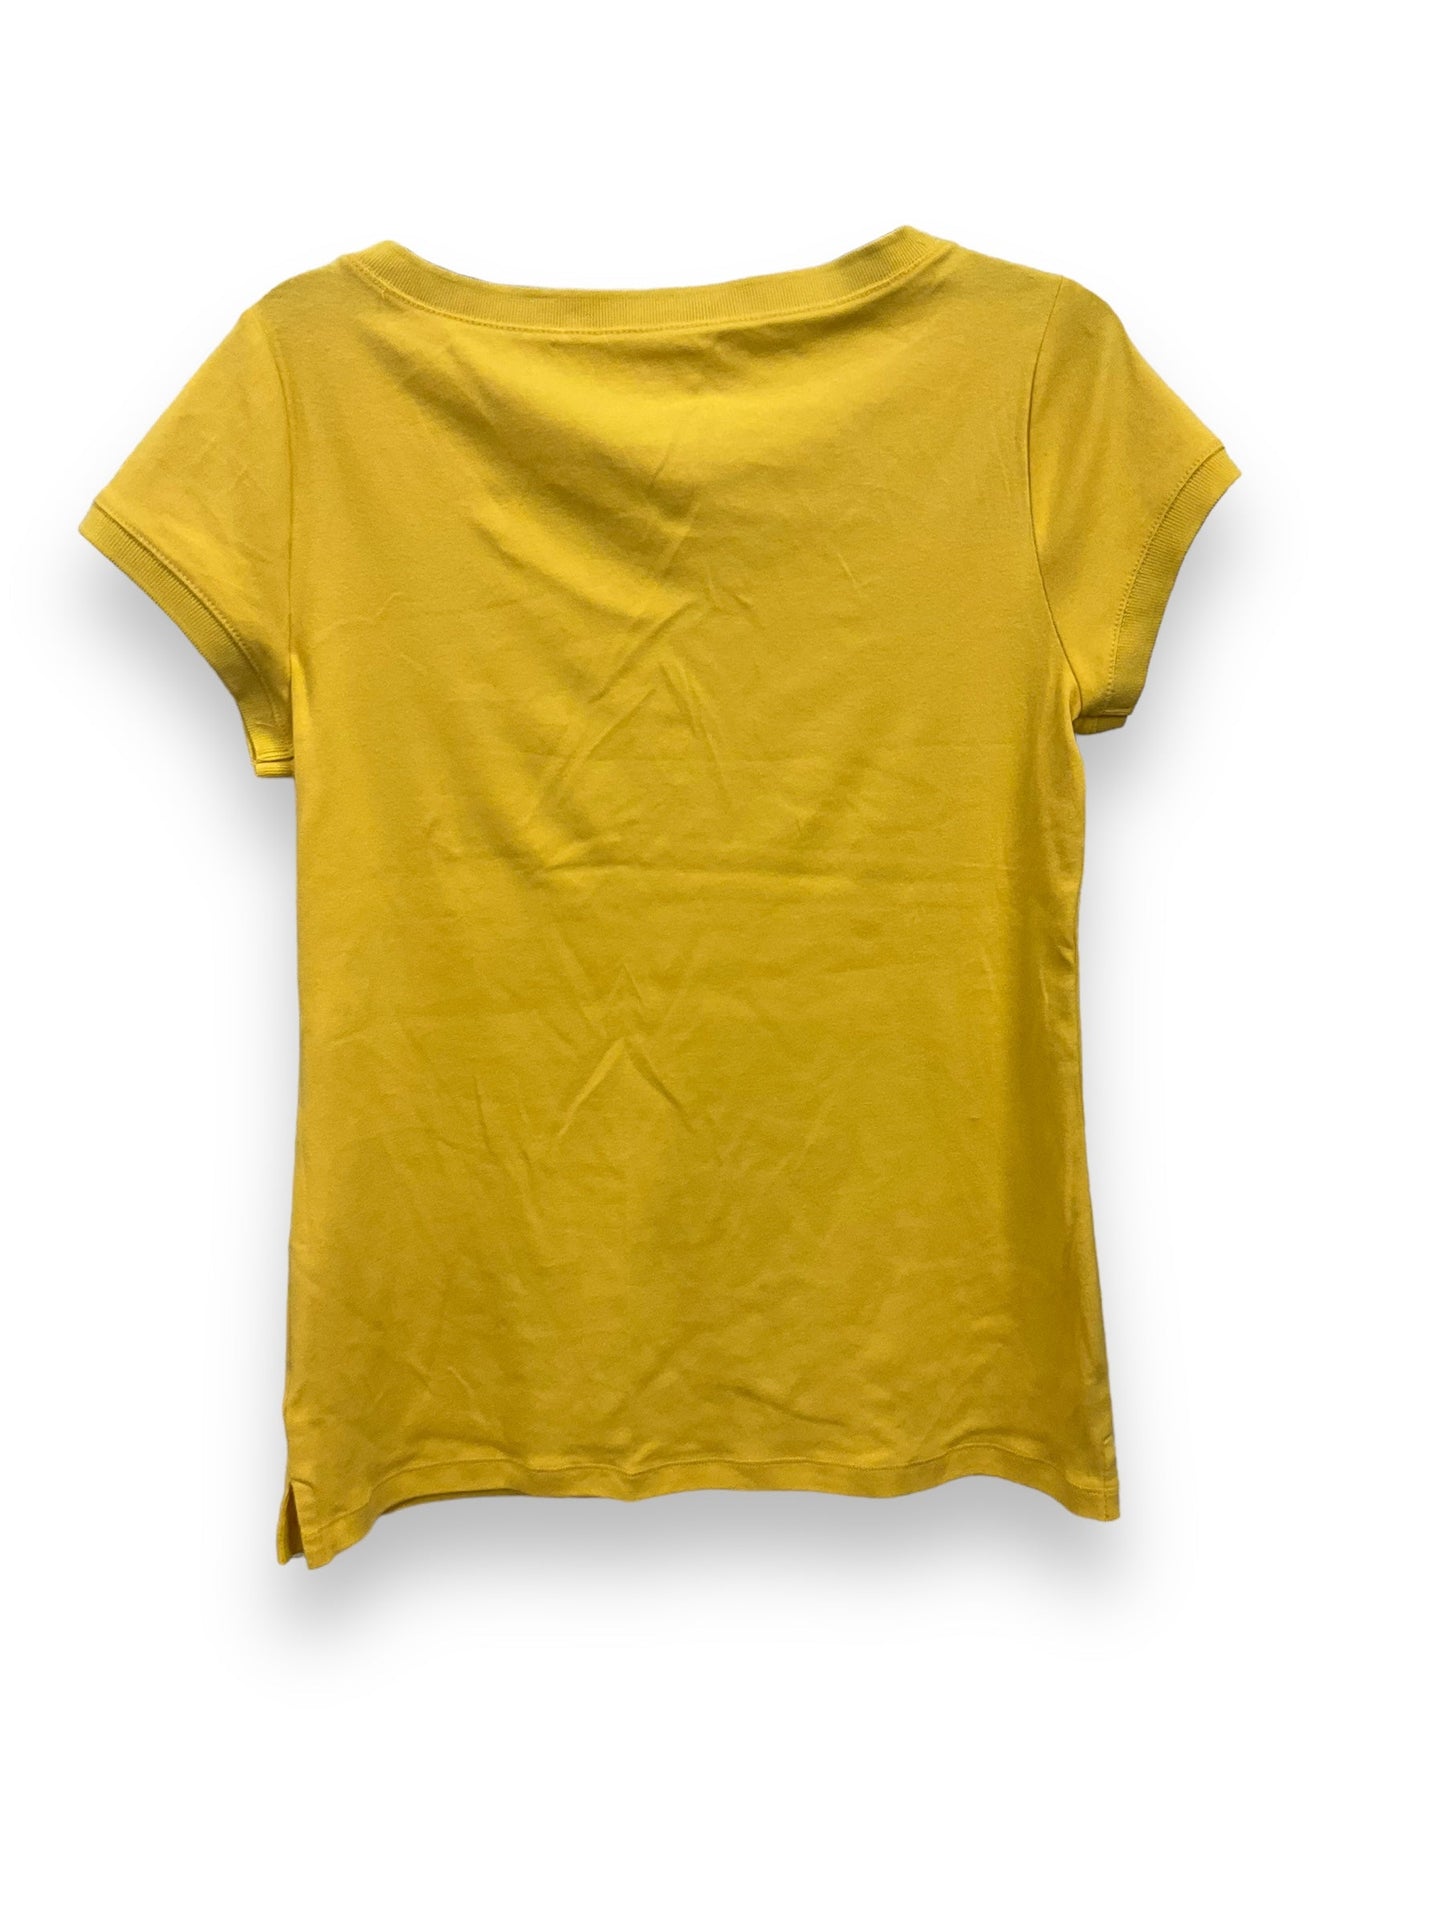 Yellow Top Short Sleeve Talbots, Size M